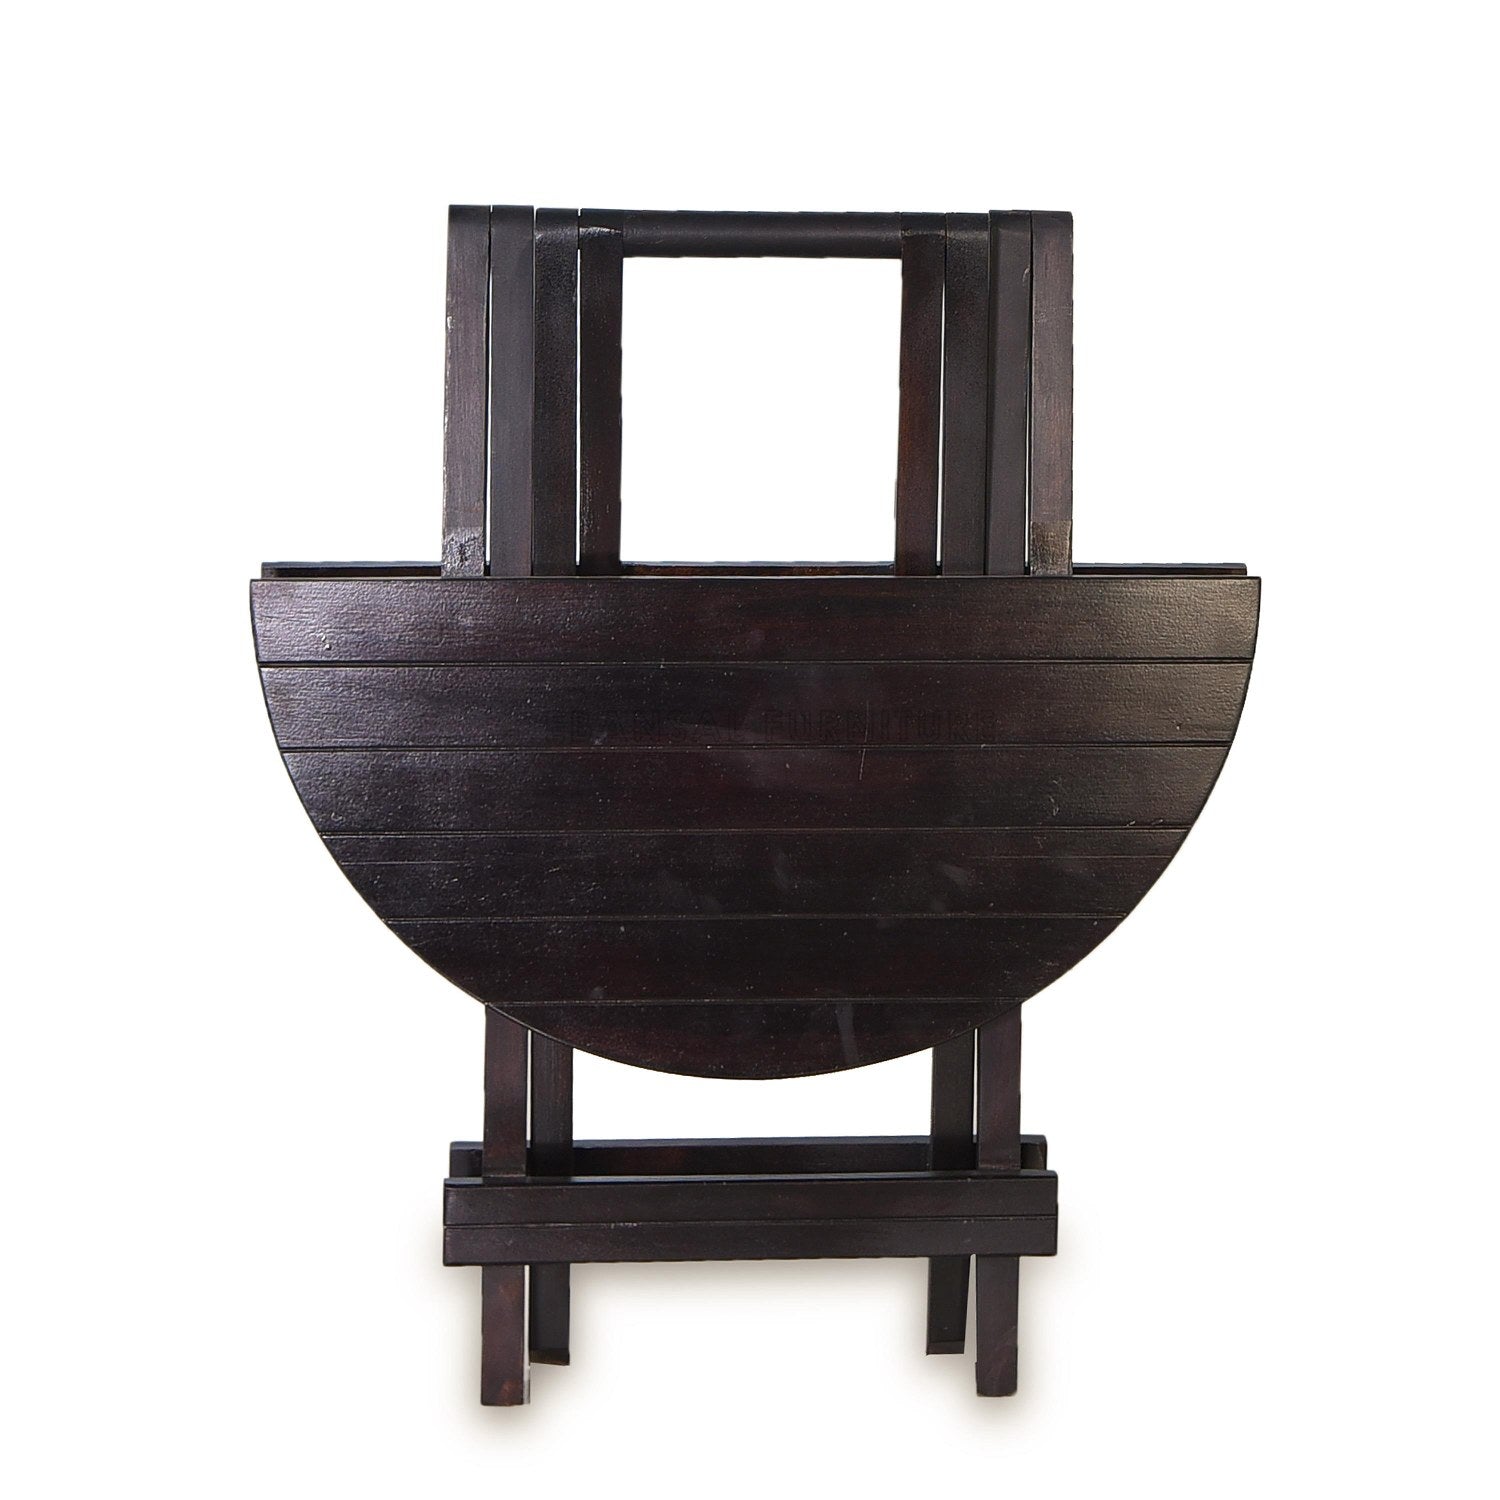 Dumdum Solid Sheesham Wood Foldable Balcony Chairs and Table Set (Walnut Finish)